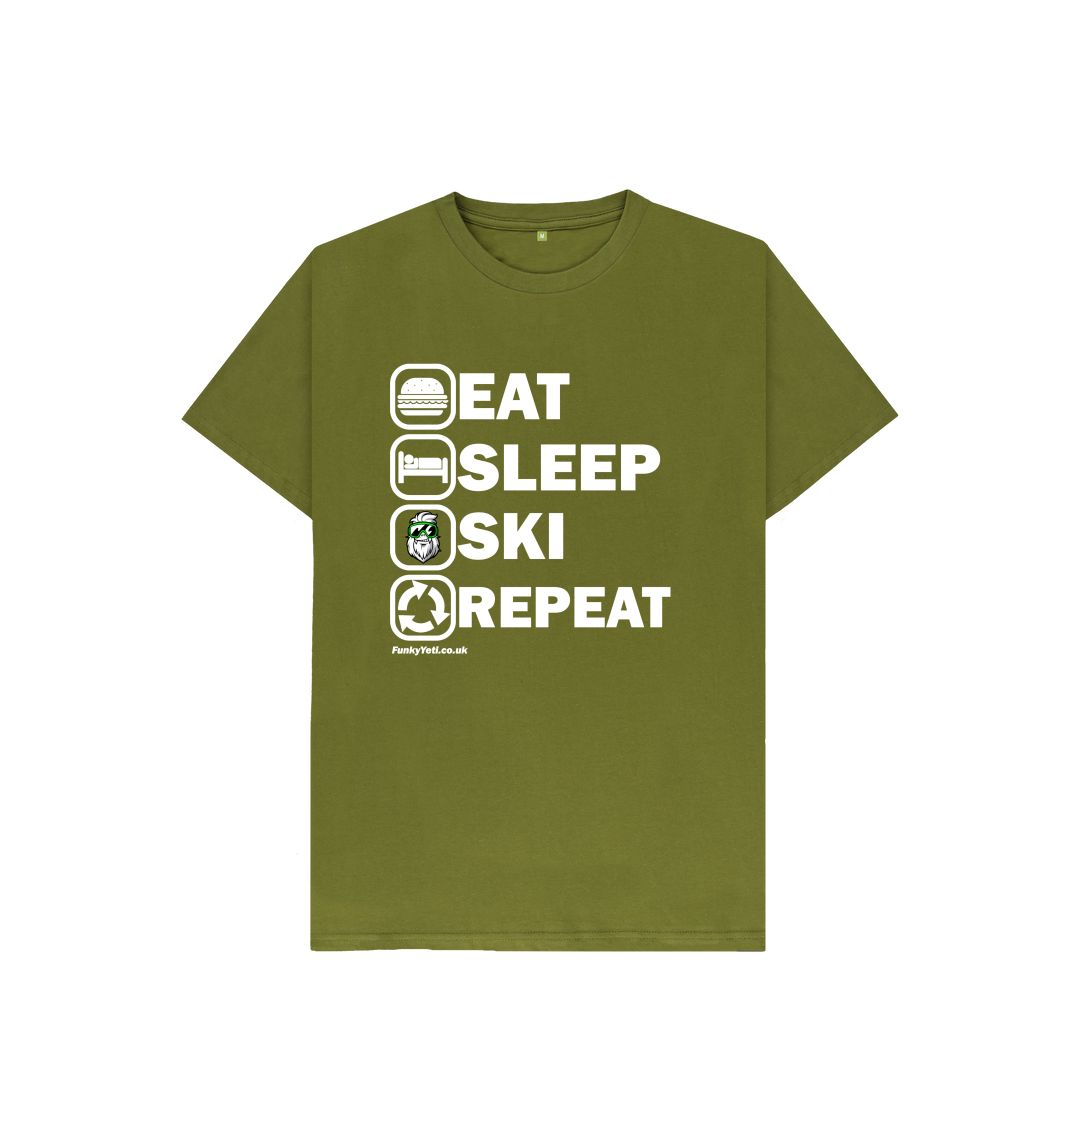 Moss Green Funky Yeti Kids Tee - Eat Sleep Ski Repeat